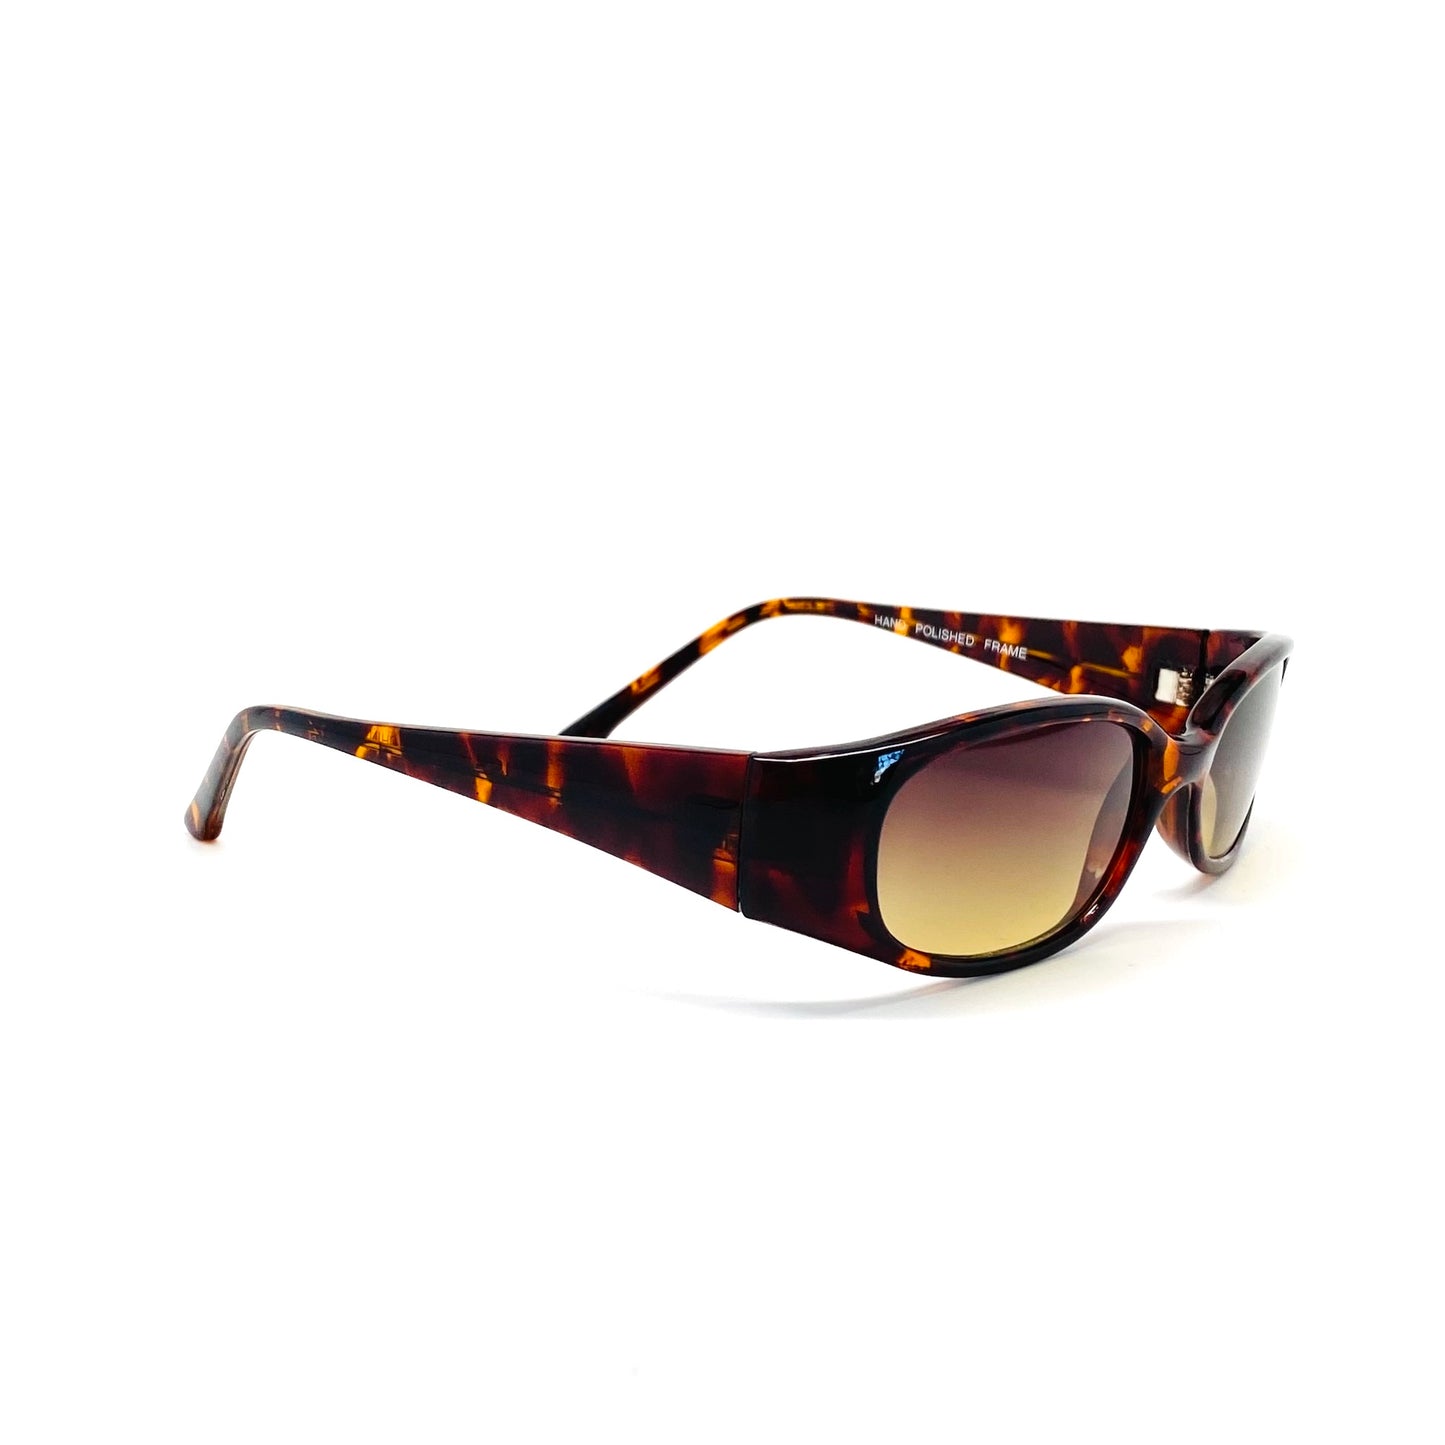 Vintage Small Size Alexine Oval Frame Sunglasses - Orange